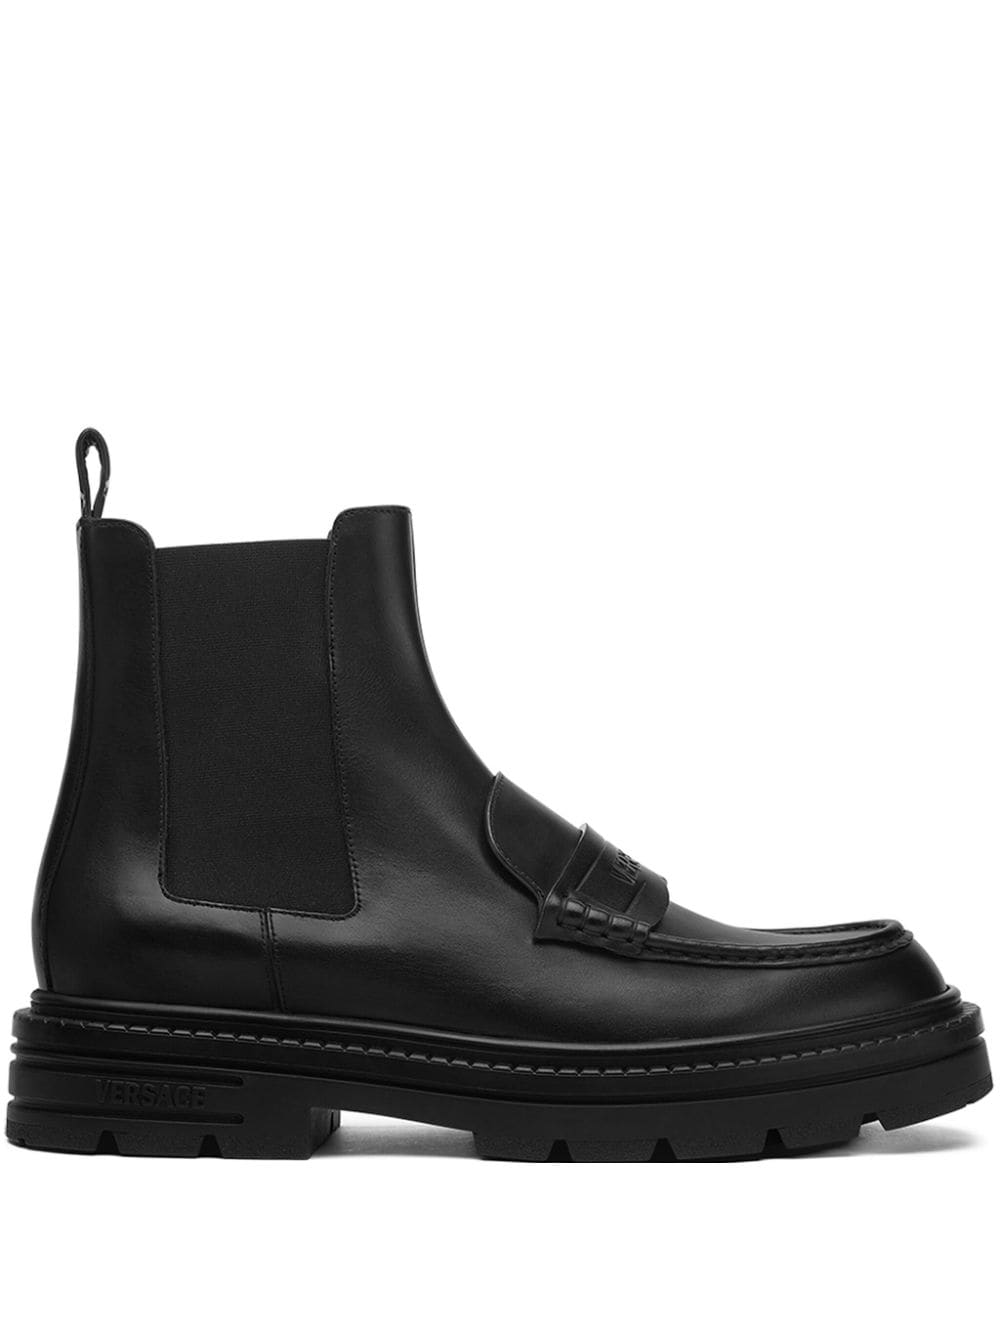 Versace Adriano leather loafer boots - Black von Versace